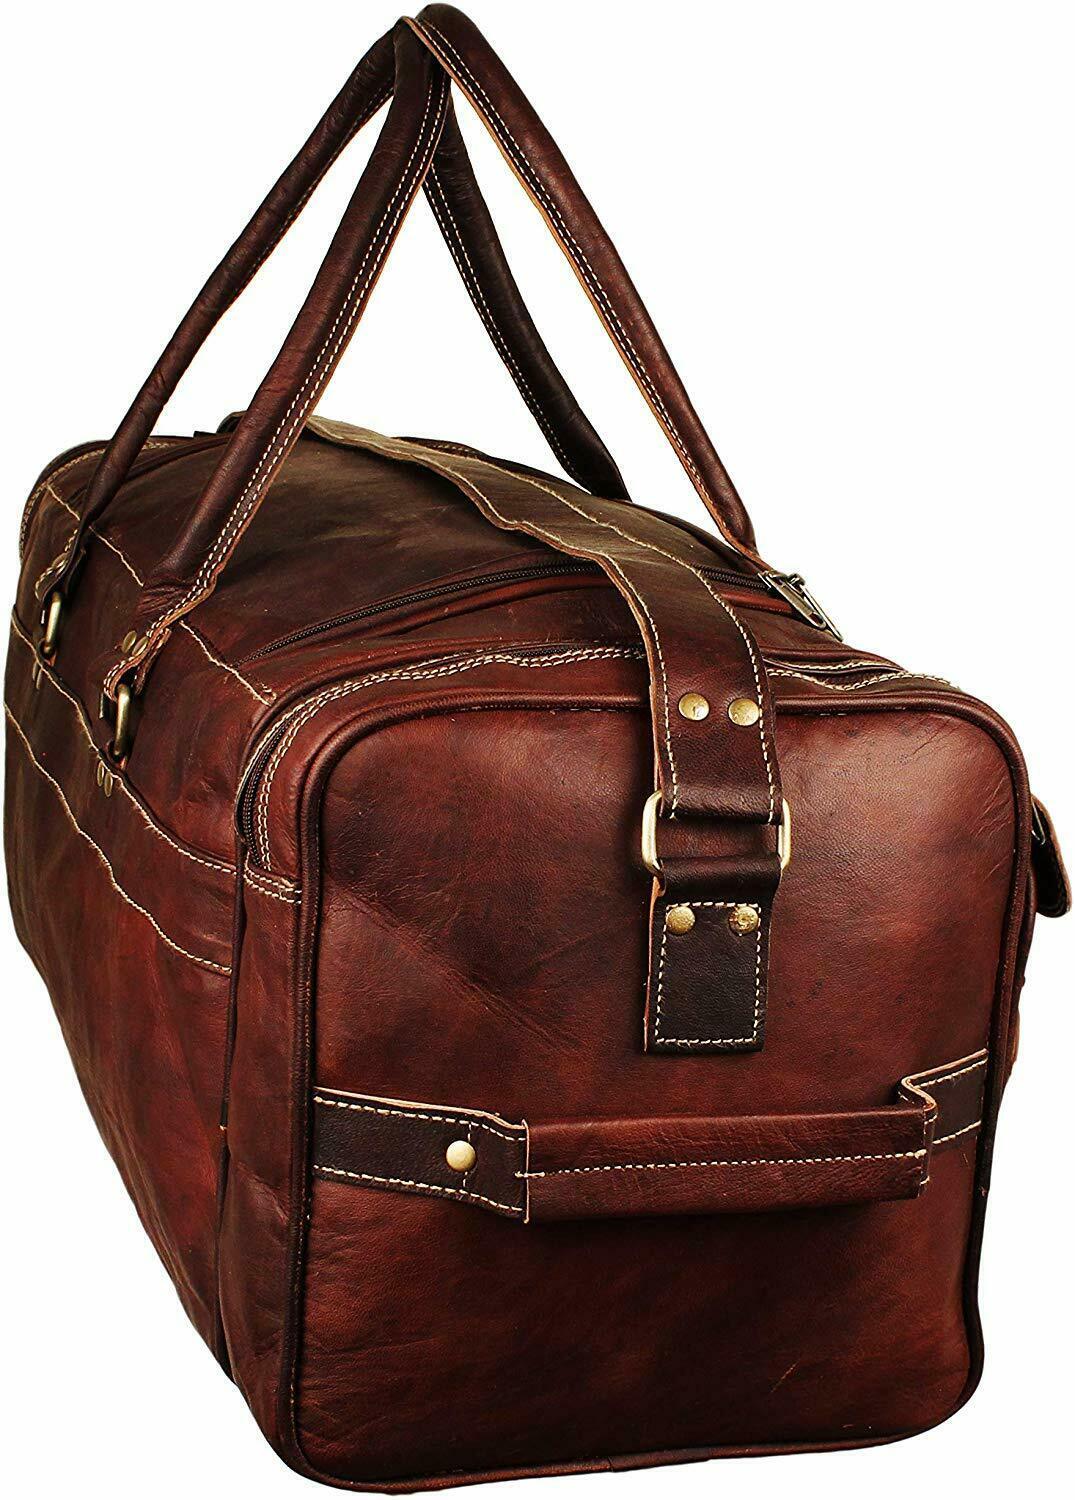 Men's Retro Duffel Bag Genuine Handmade Leather Luggage Large Duffel ...